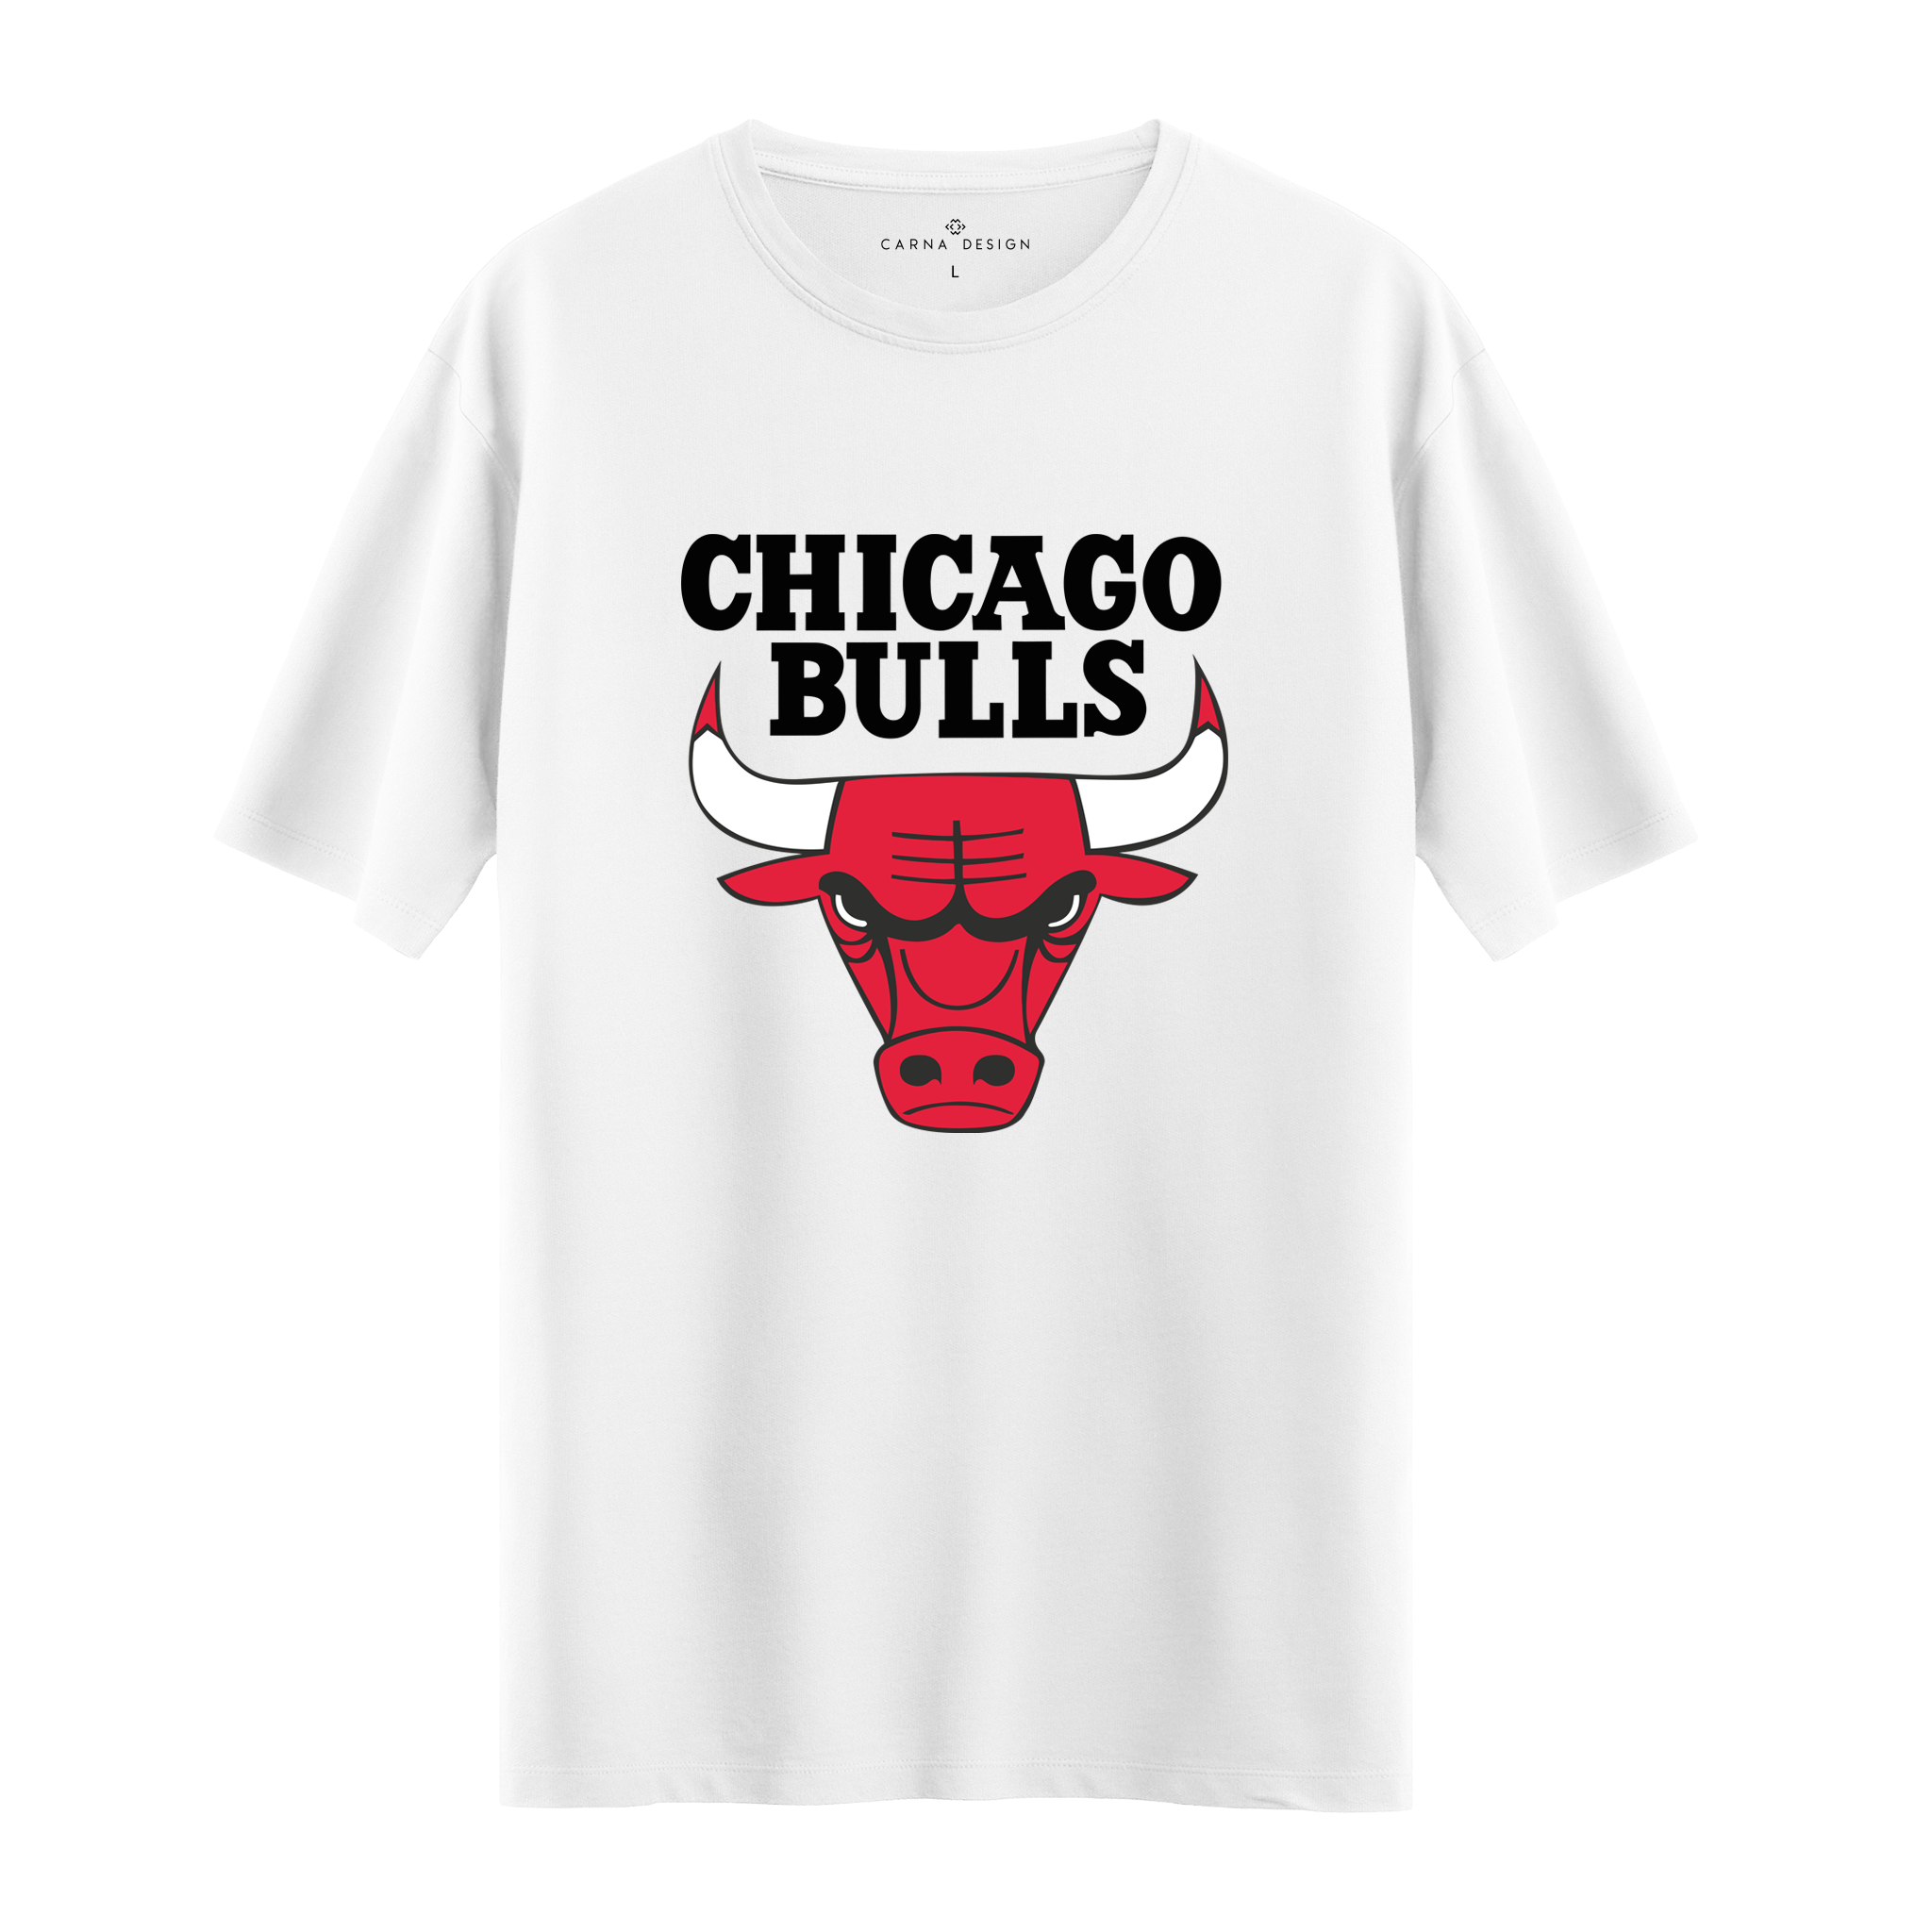 Chicago Bulls - Oversize T-shirt